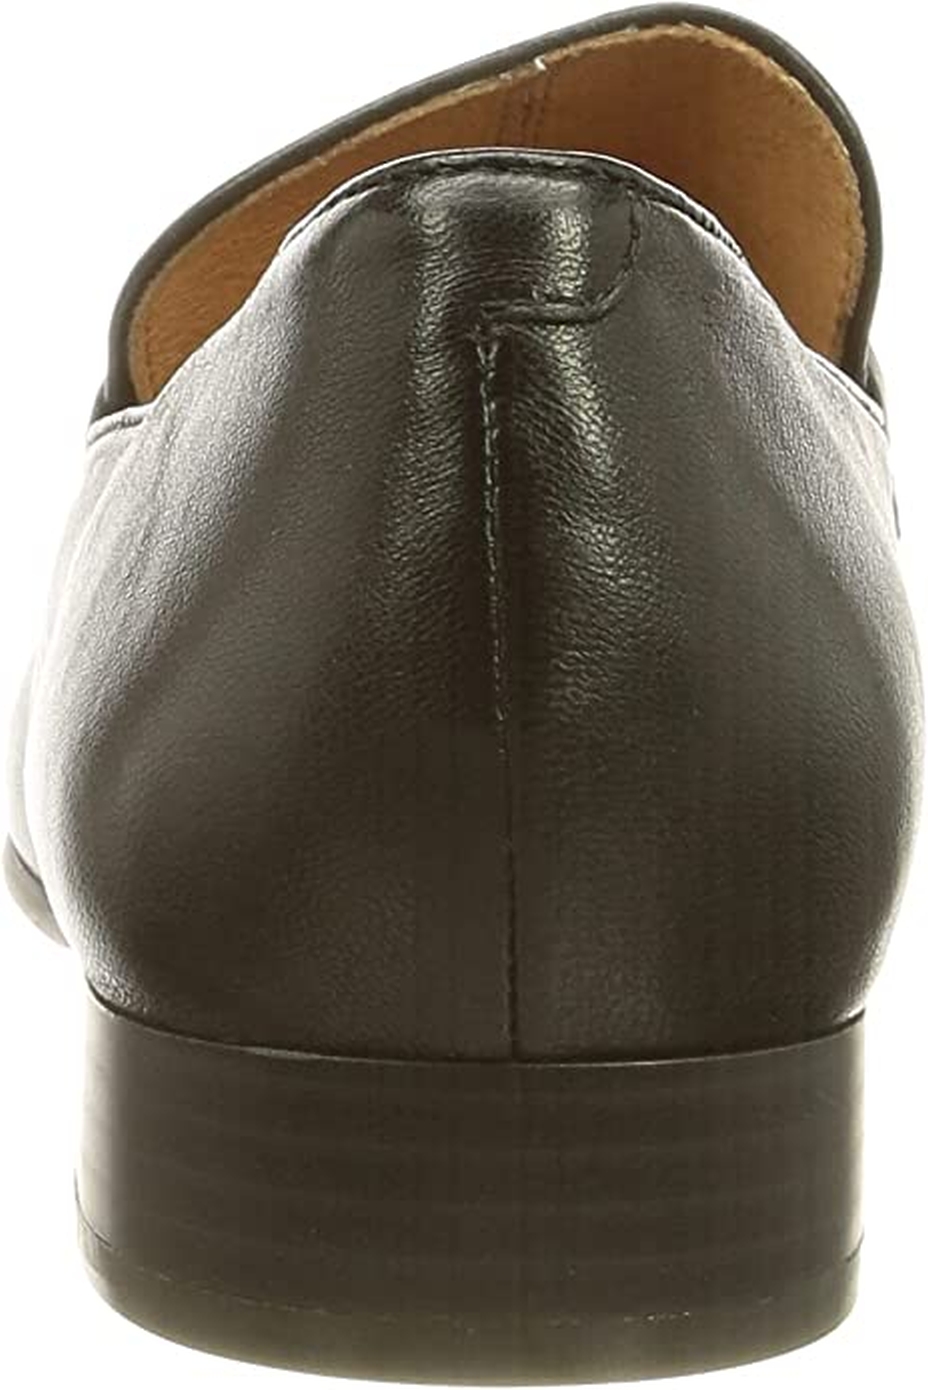 Slipper - Black smooth leather